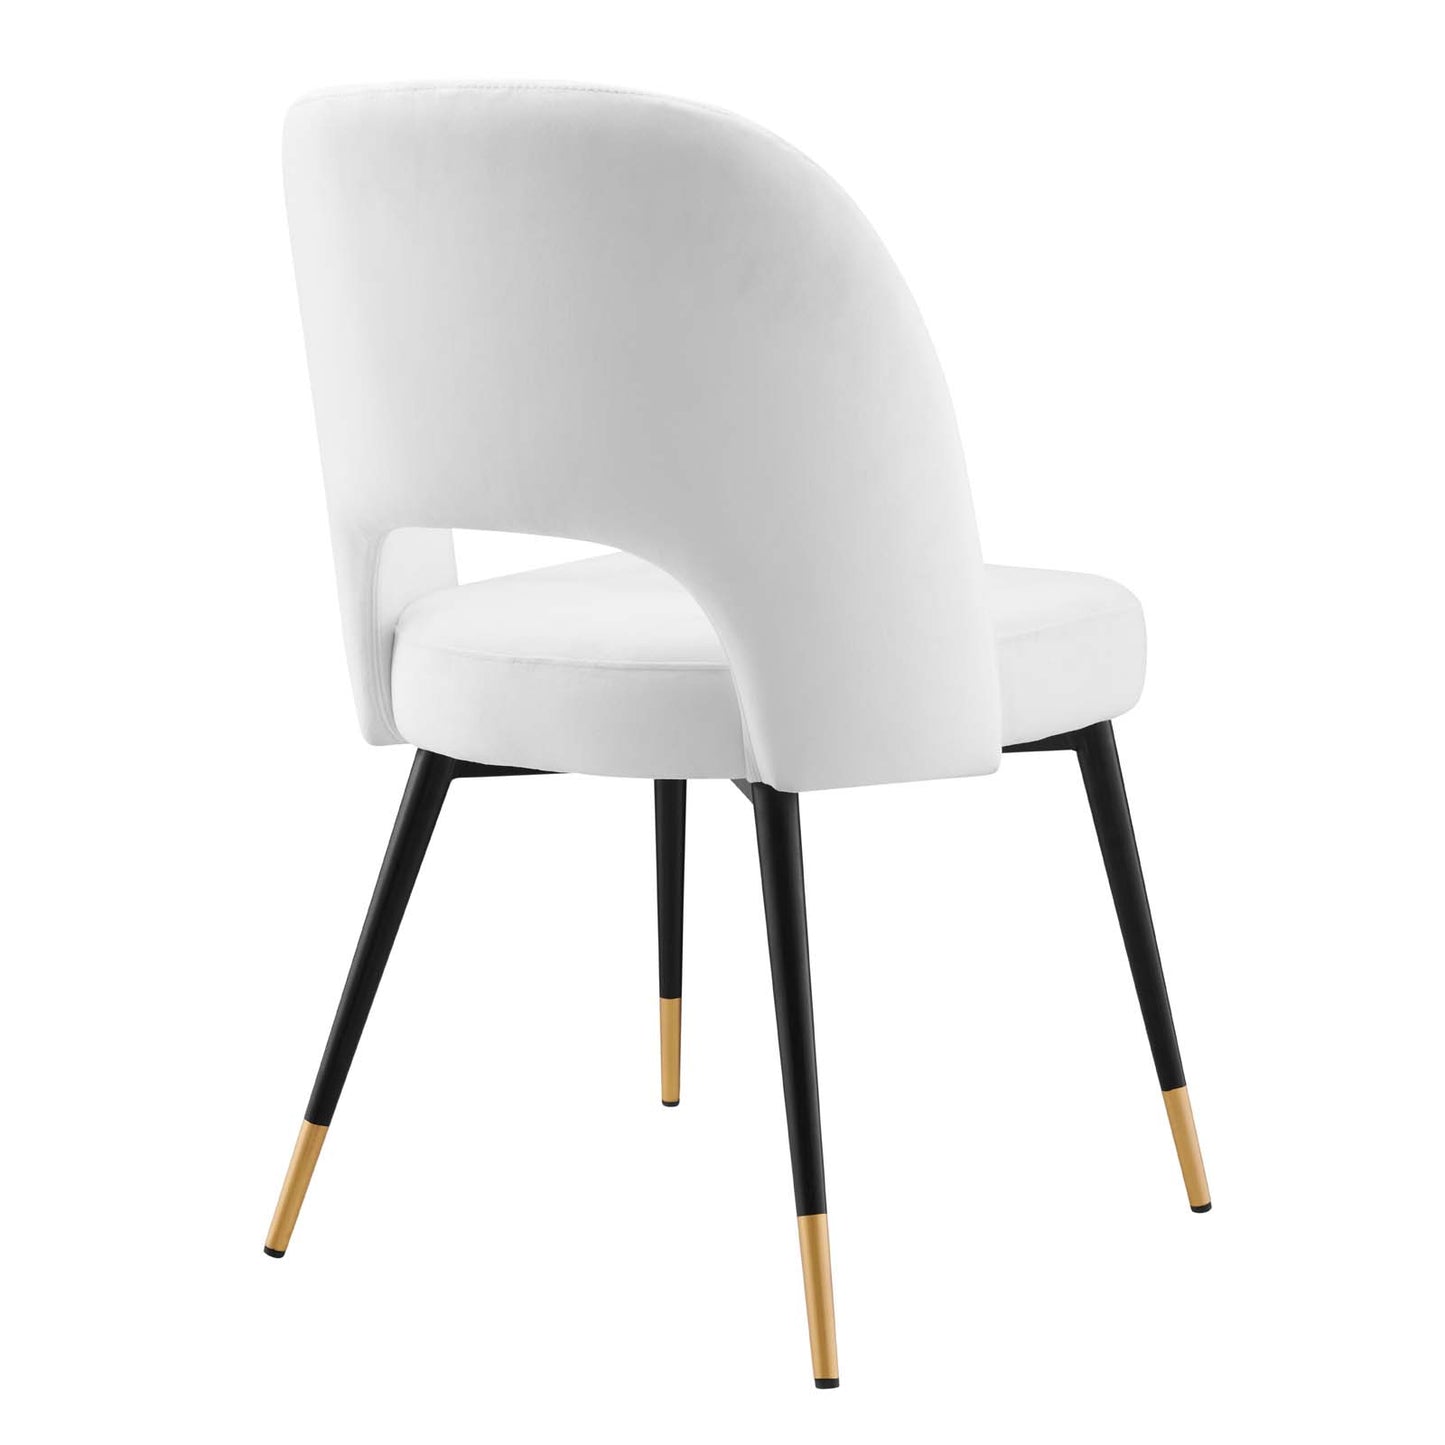 Rouse Performance Velvet Dining Side Chairs - Set of 2 White EEI-4599-WHI